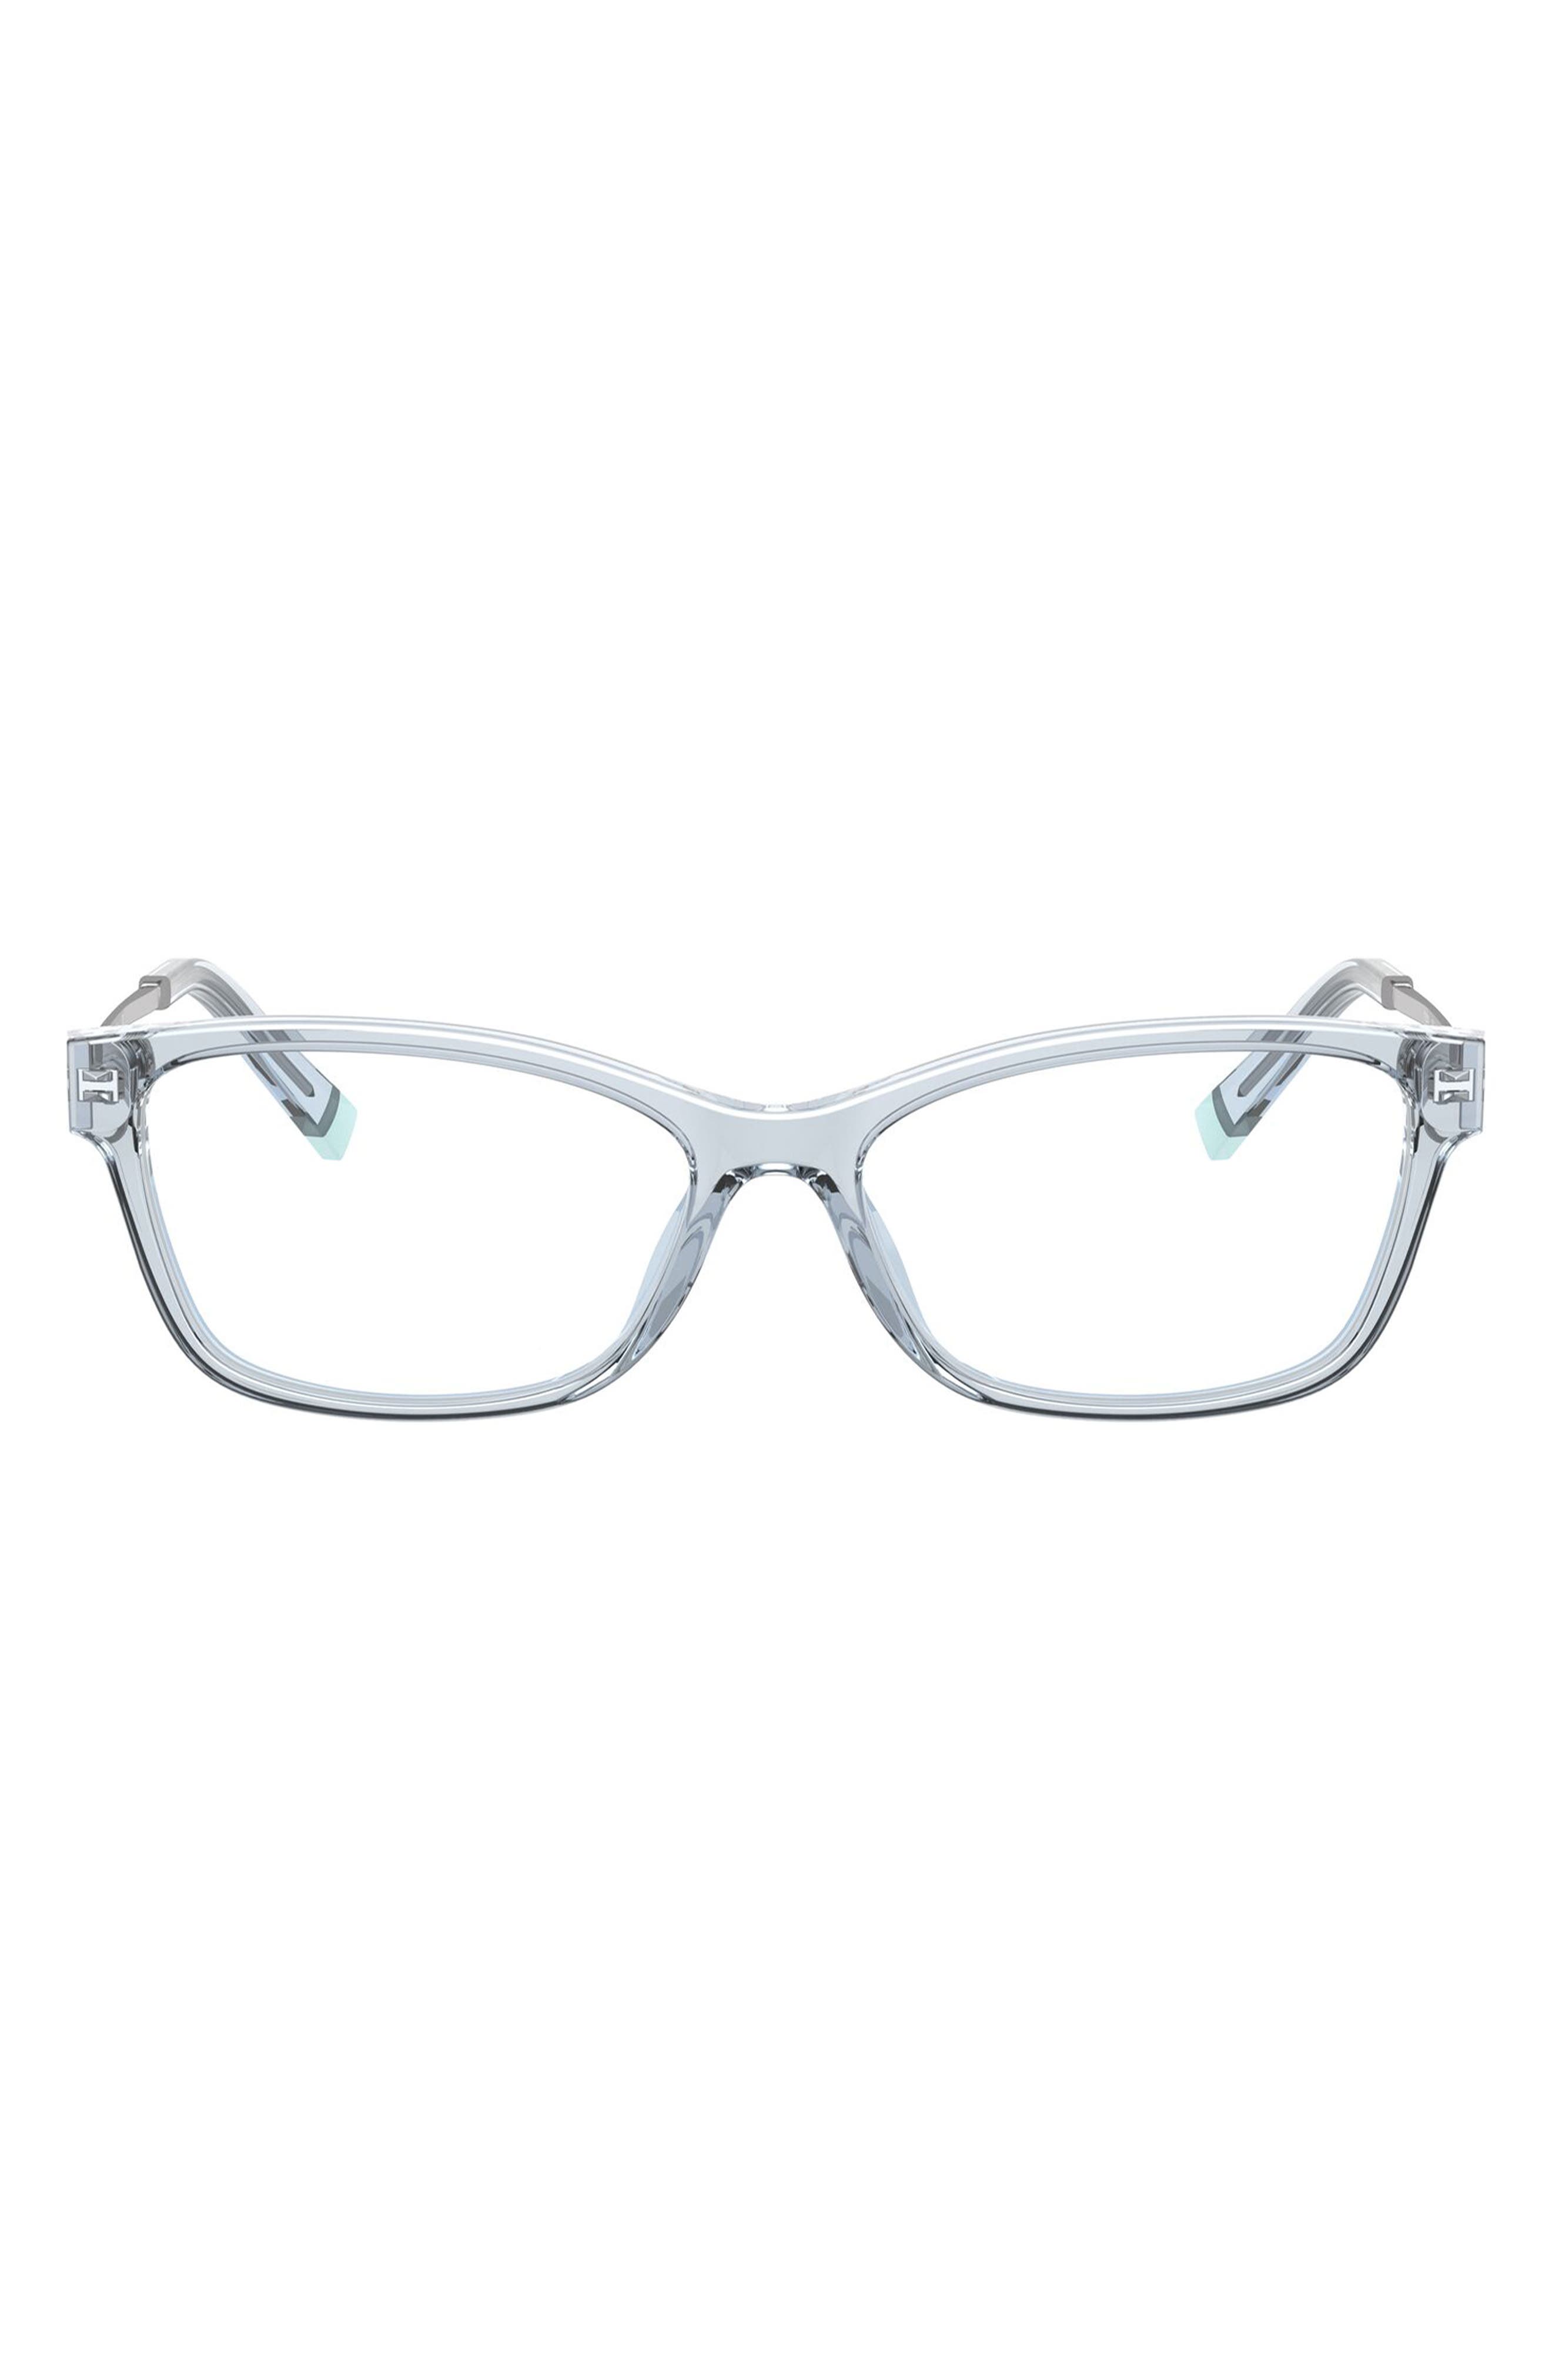 Tiffany & Co. 54mm Rectangular Optical Glasses in Blue